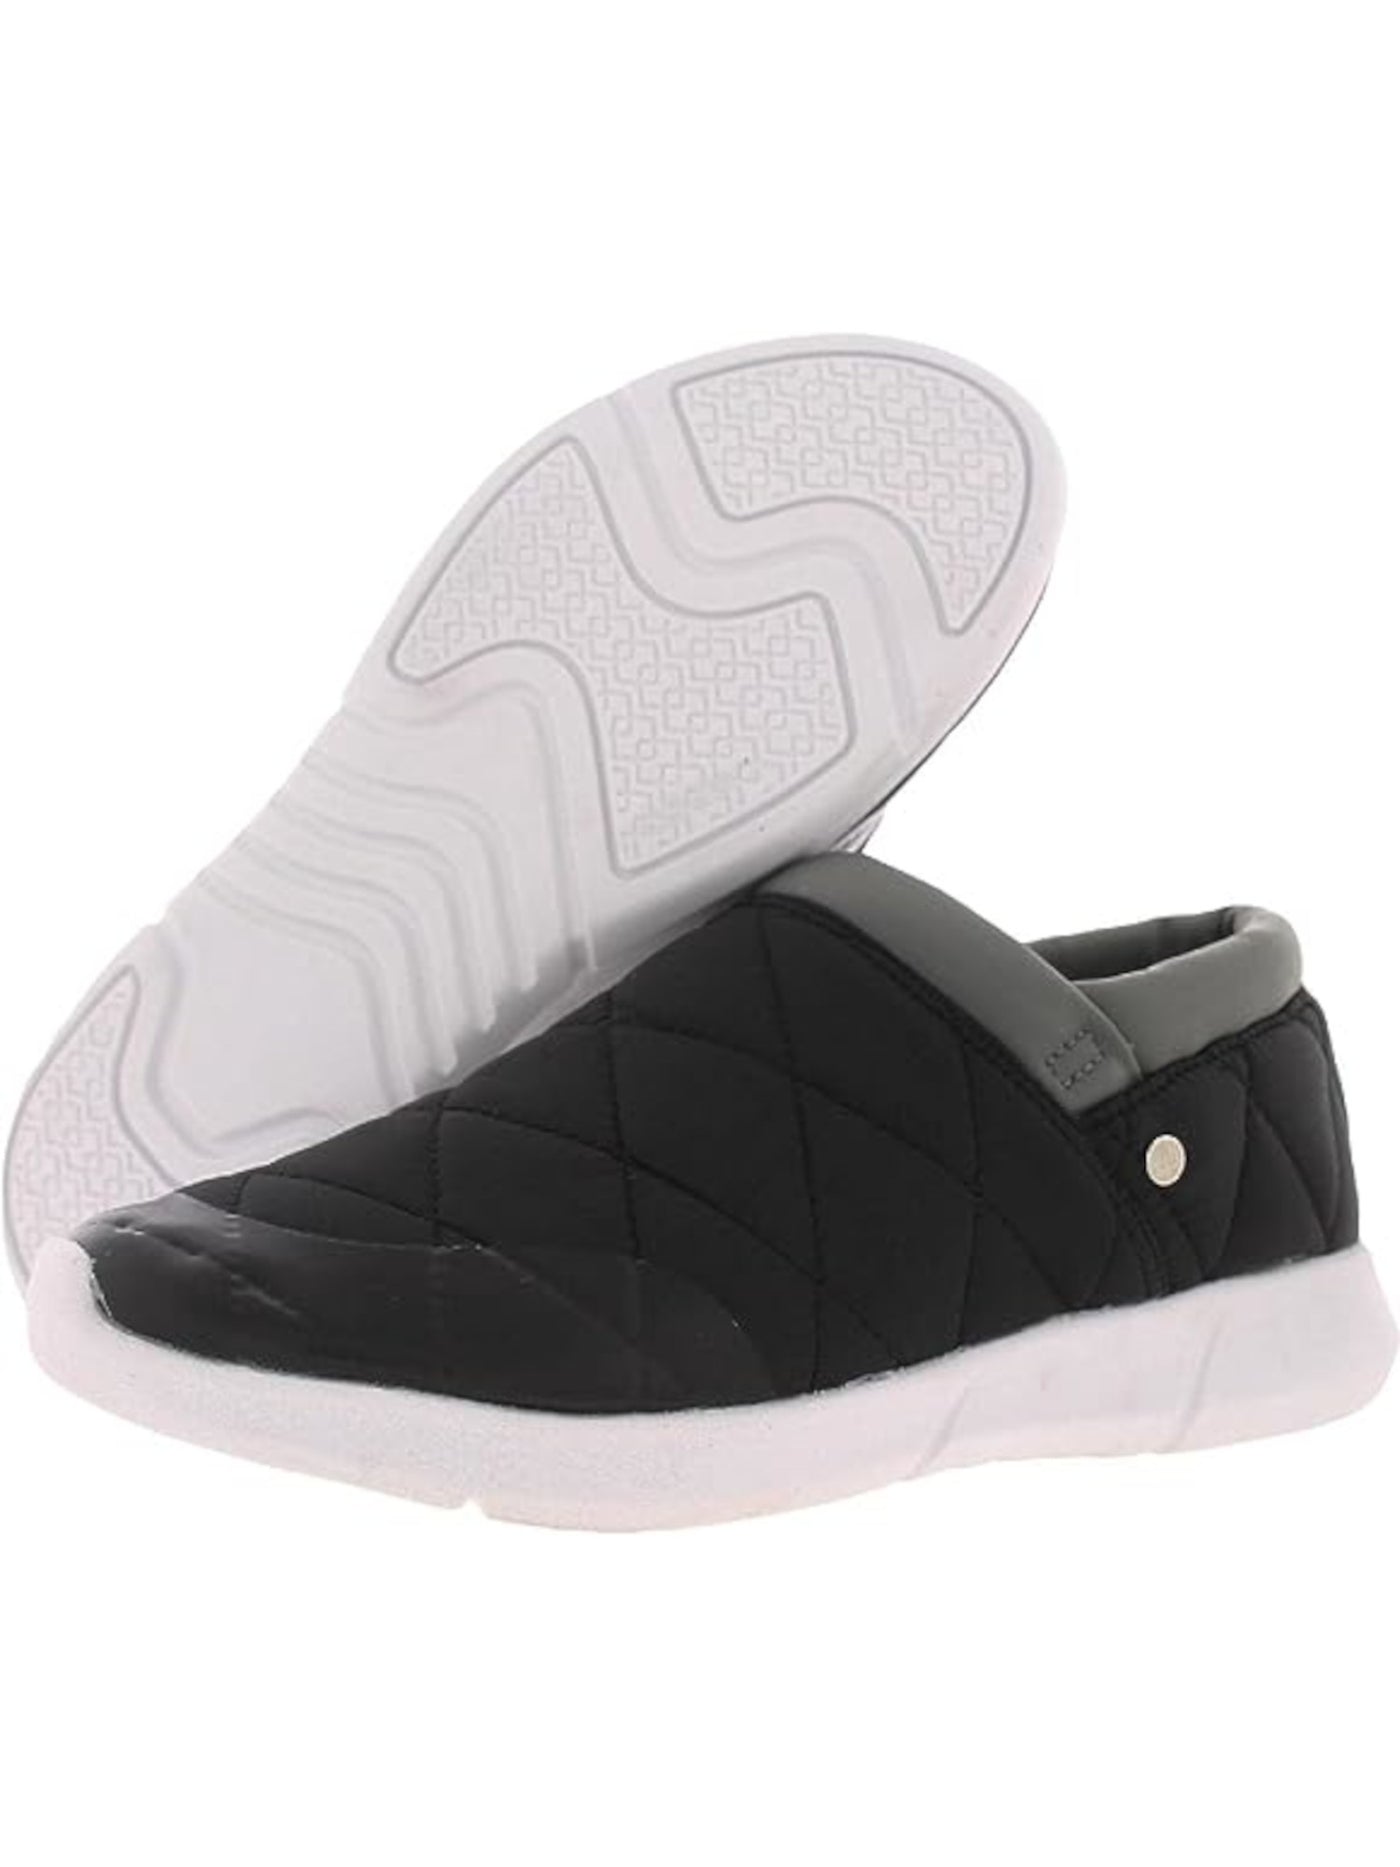 LONDON FOG Womens Black Quilted Kellie Round Toe Wedge Slip On Sneakers Shoes 9.5 M